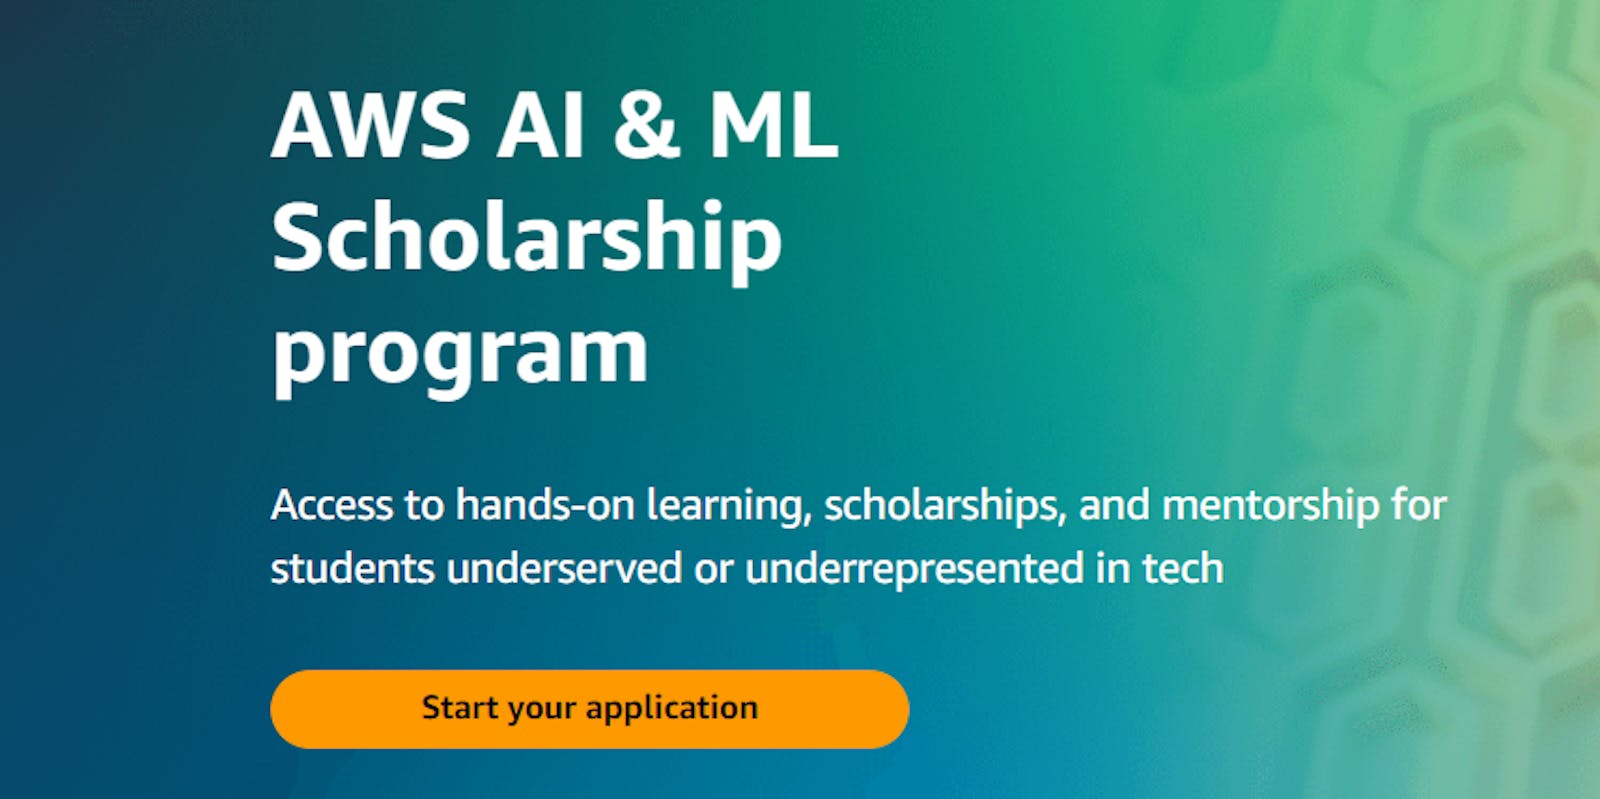 AWS AI & ML Scholarship Everything you need to know